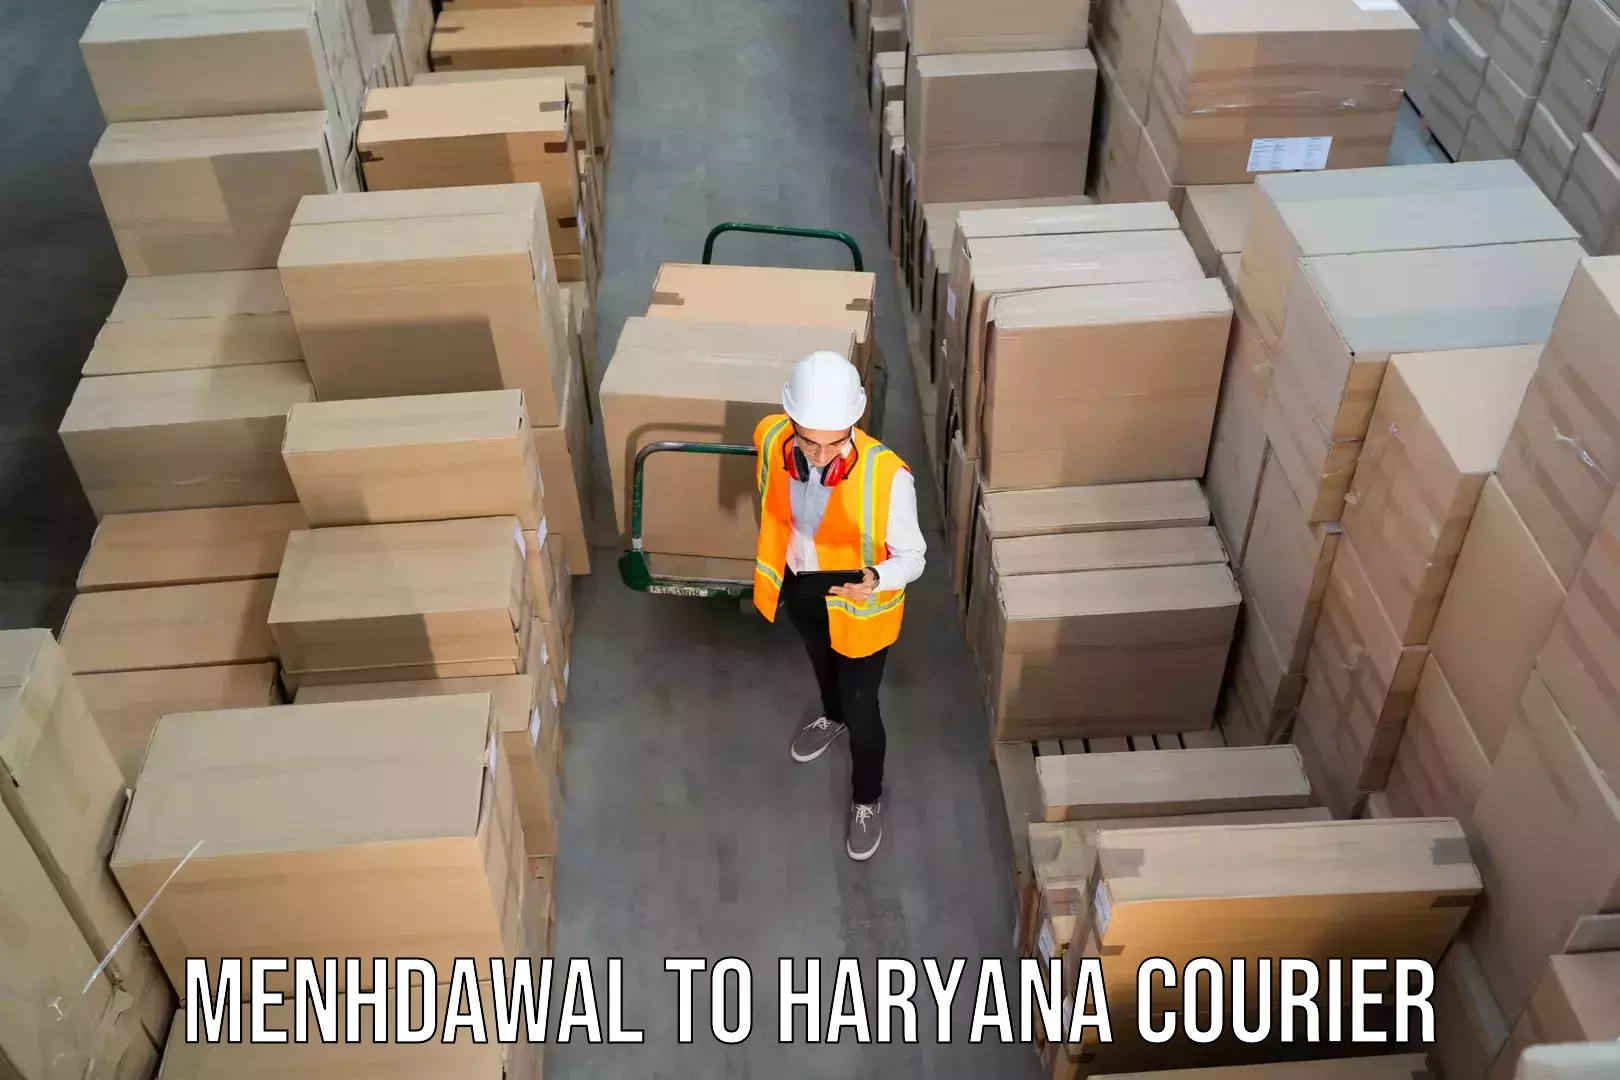 Custom courier packaging Menhdawal to Haryana